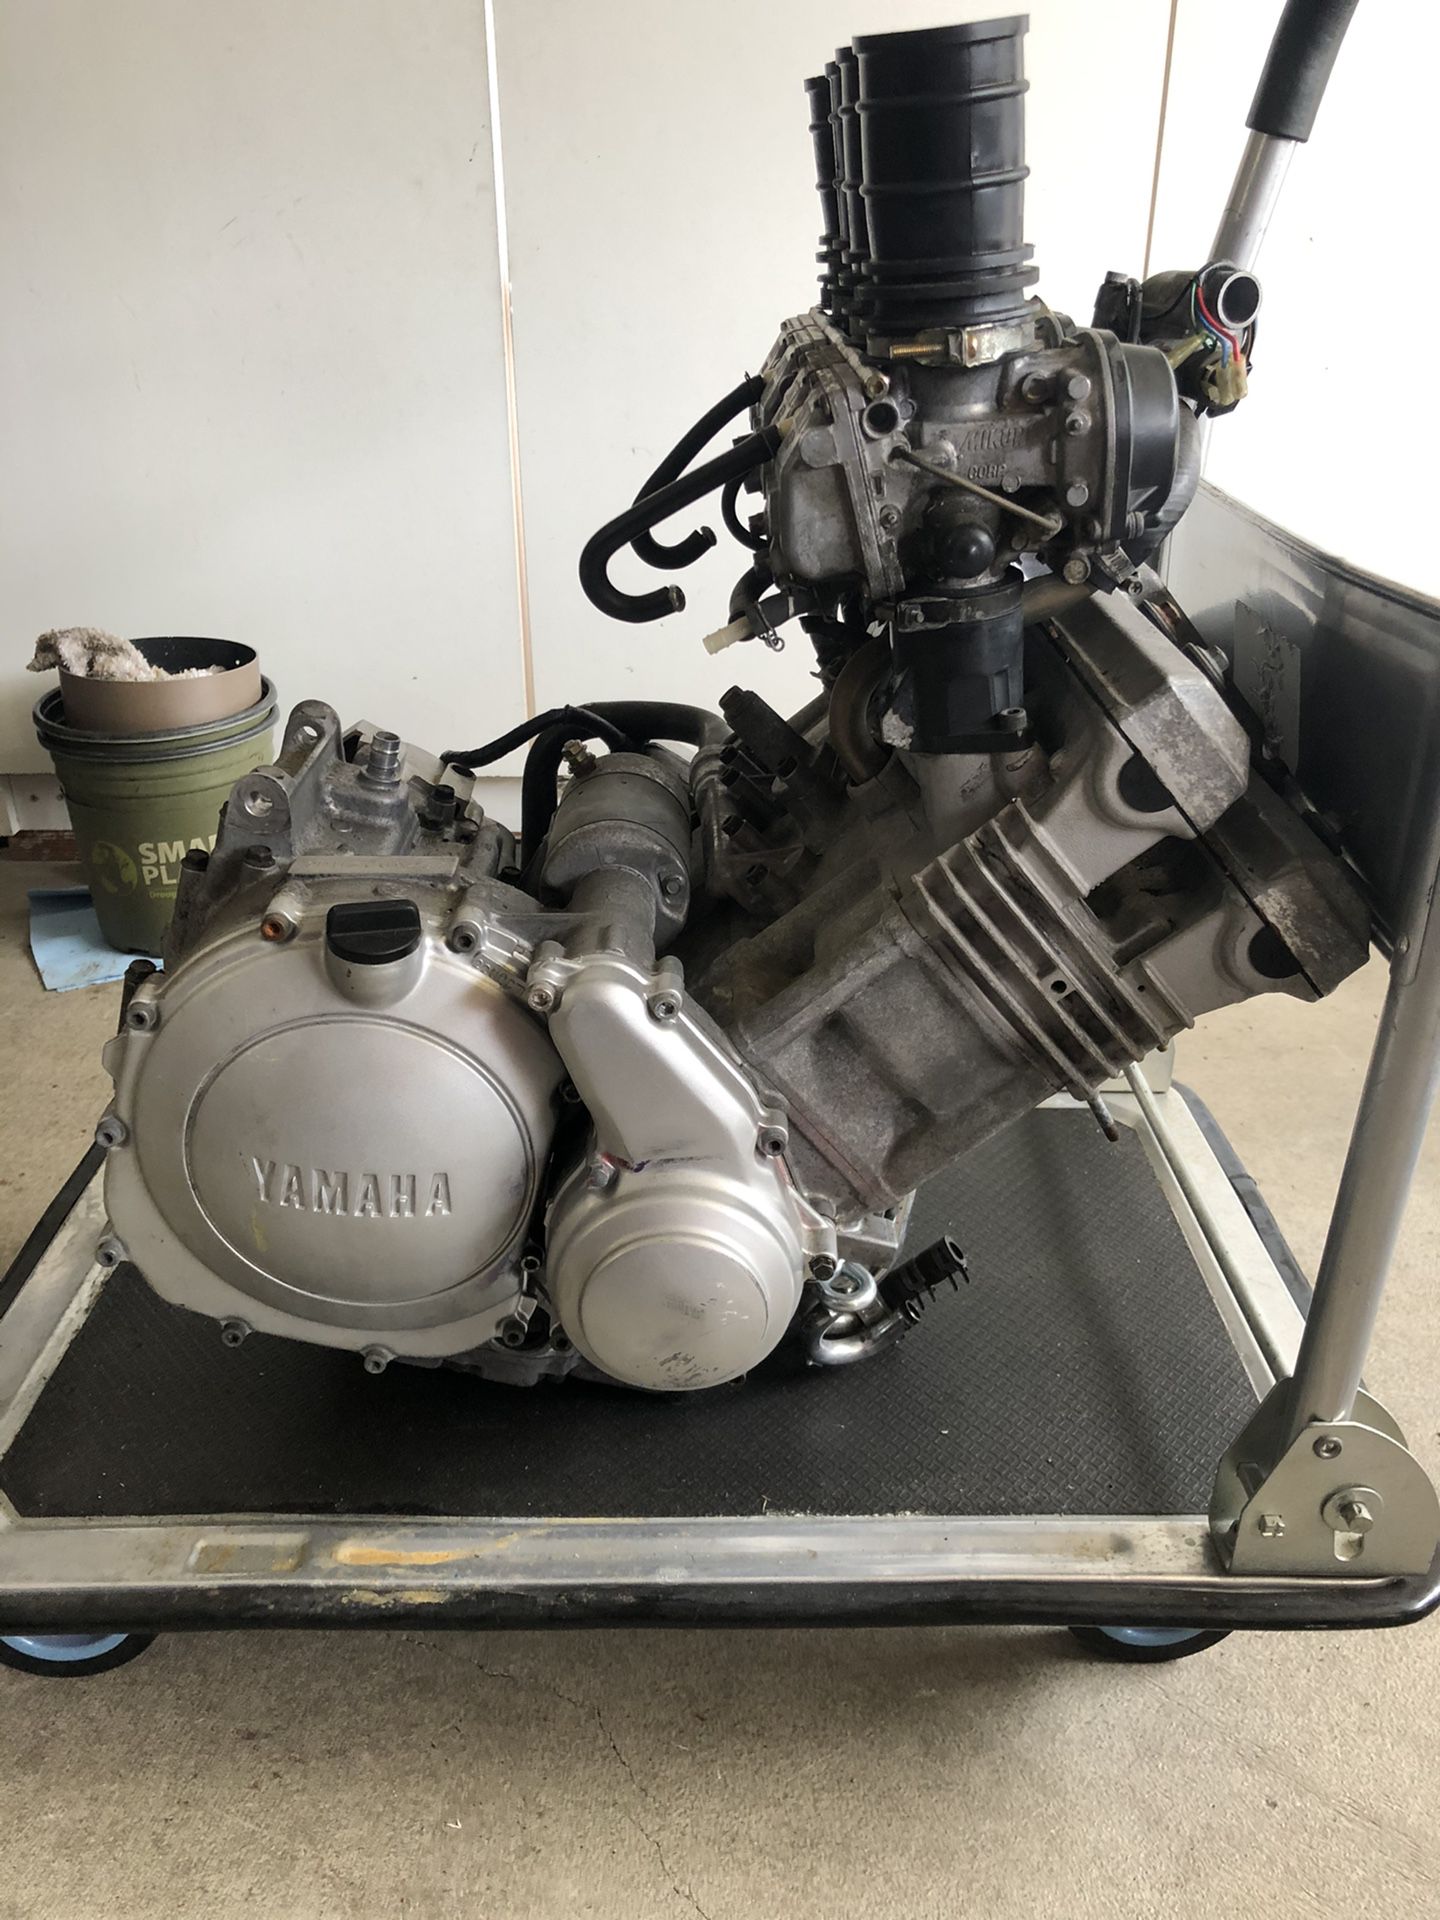 Yamaha 600cc engine